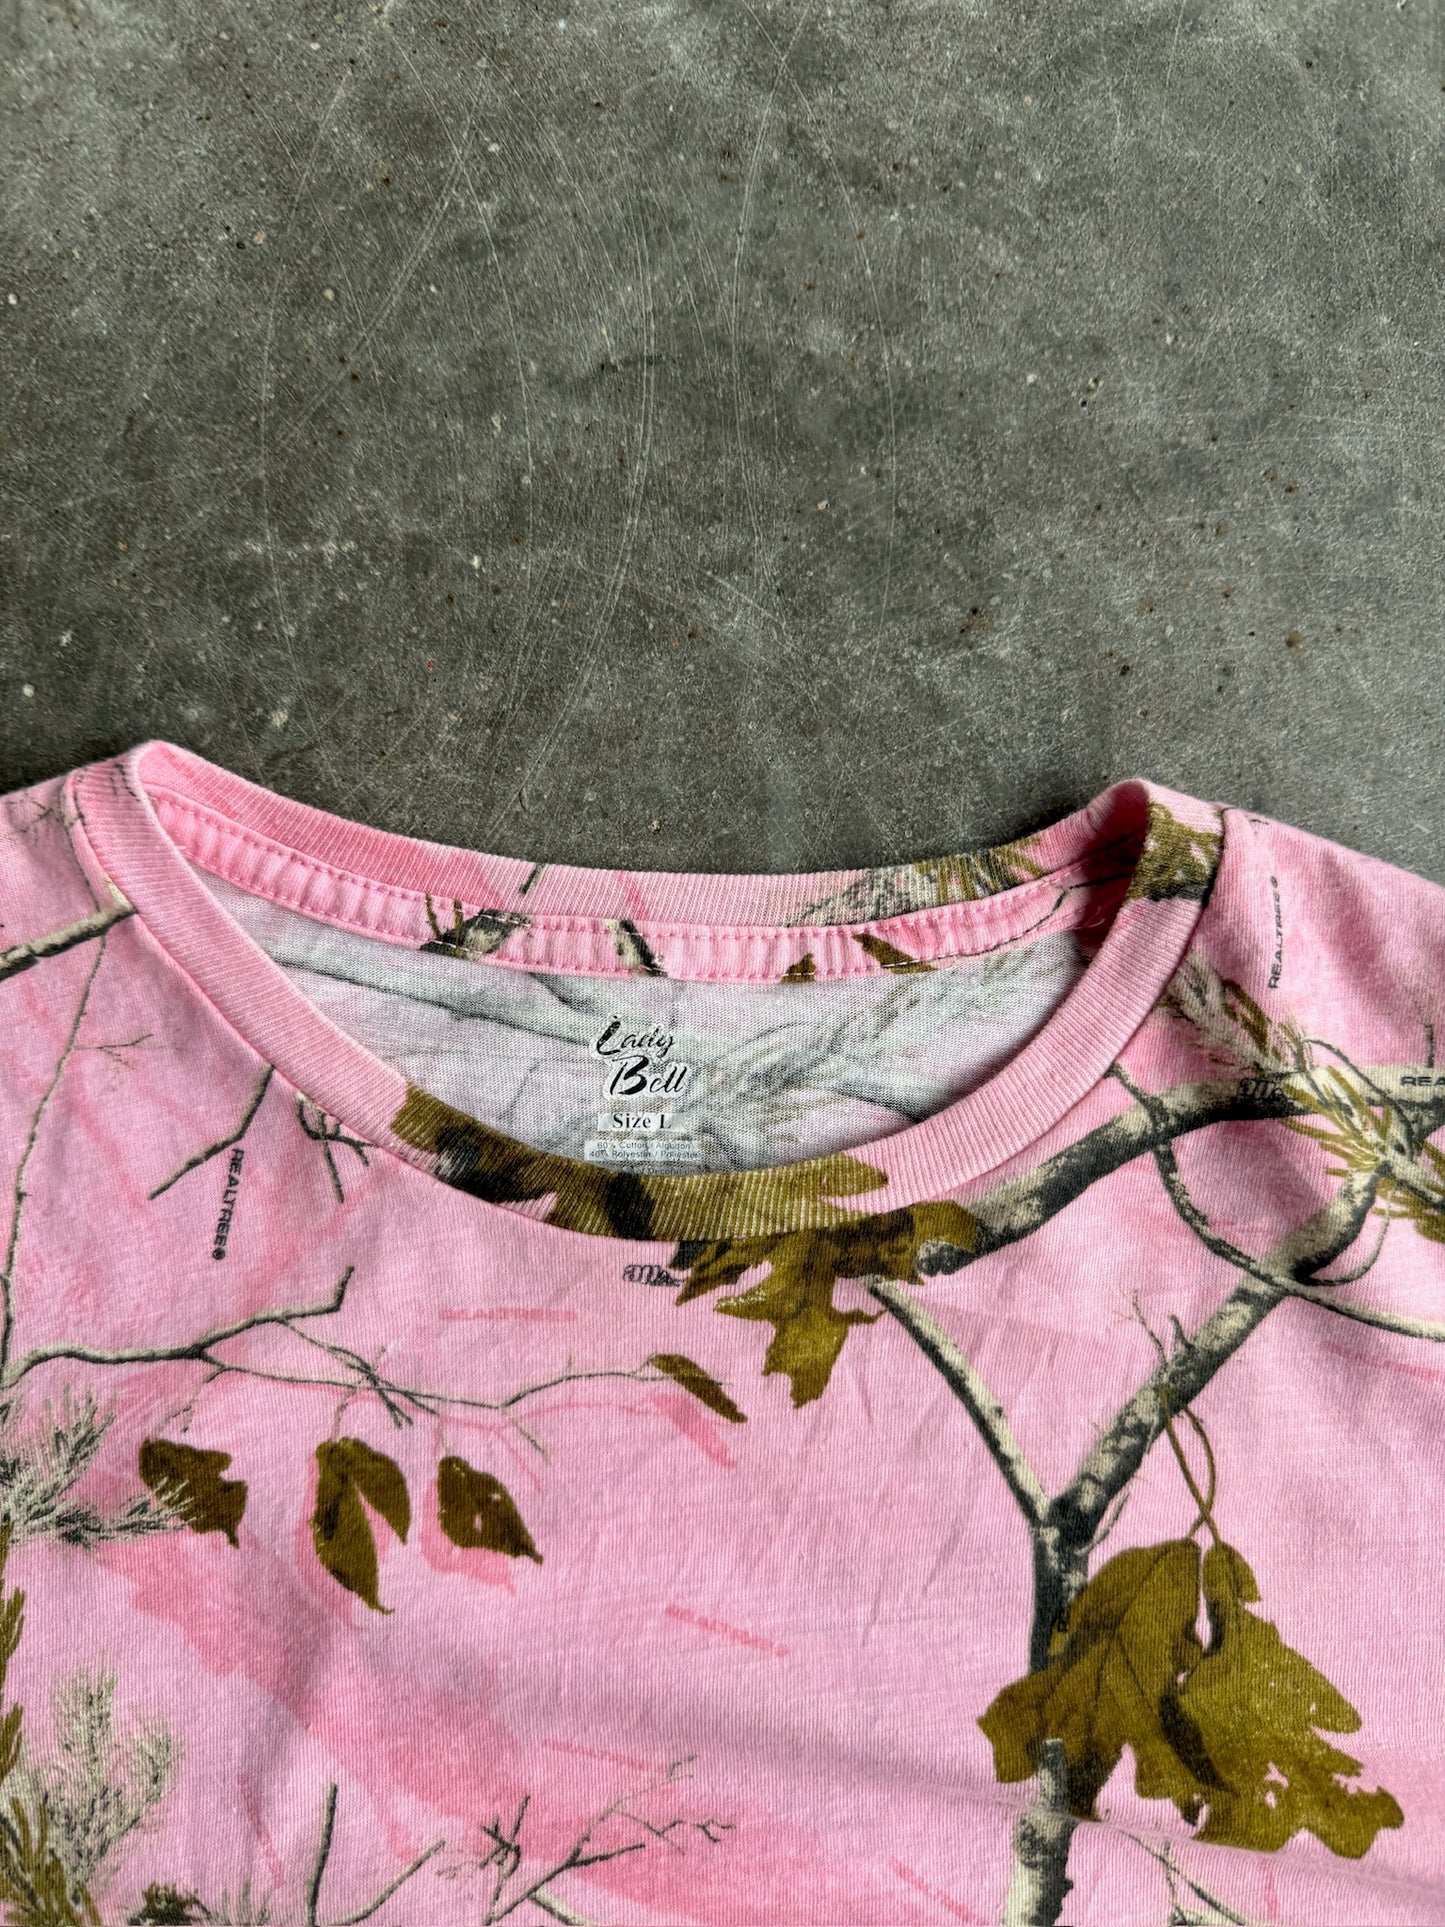 Vintage Pink Lady Bell Camo Shirt - L